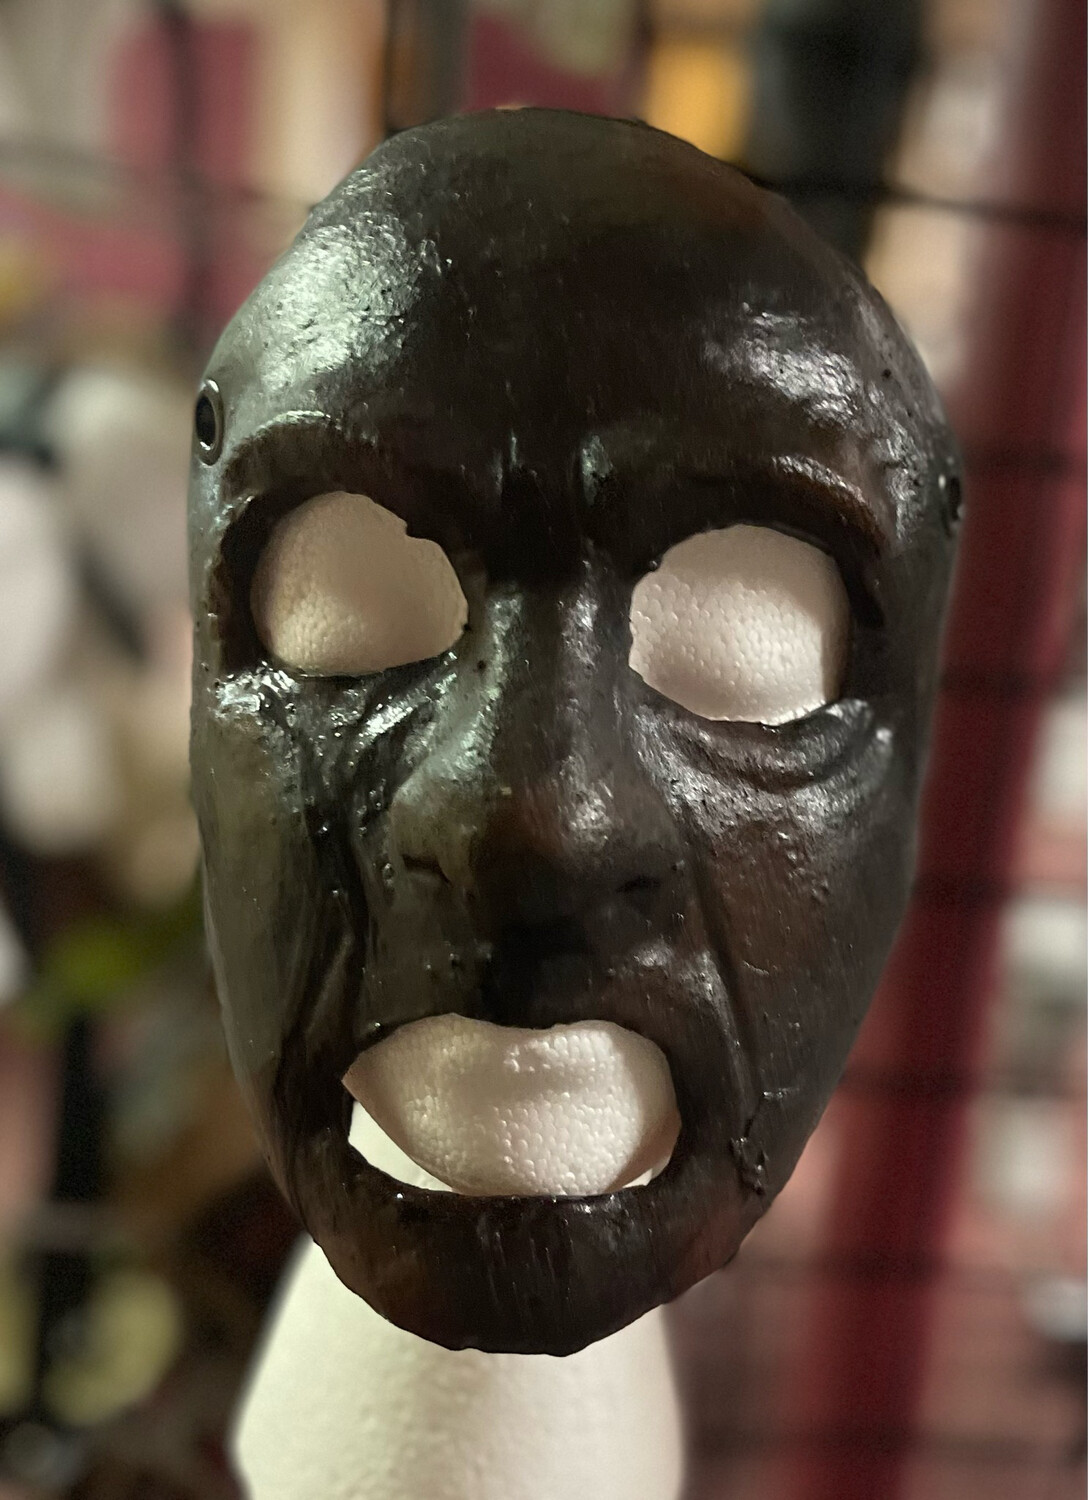 Skin Mask - As shown